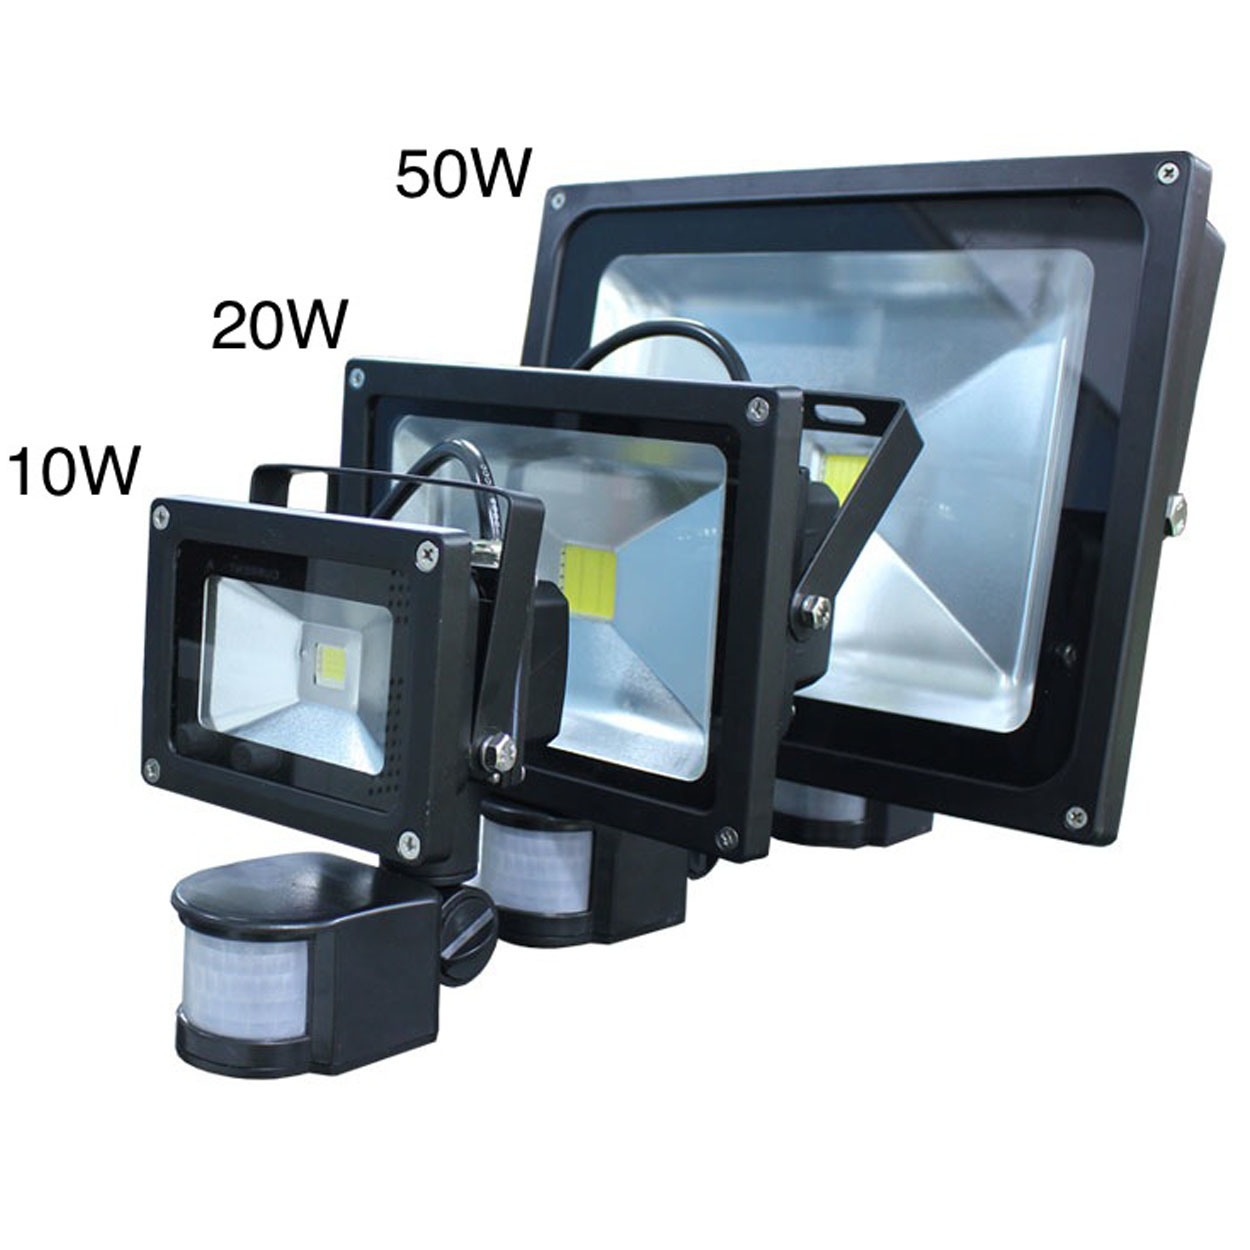 10W/20W/50W PIR Sensor LED Flood Light for Outdoor